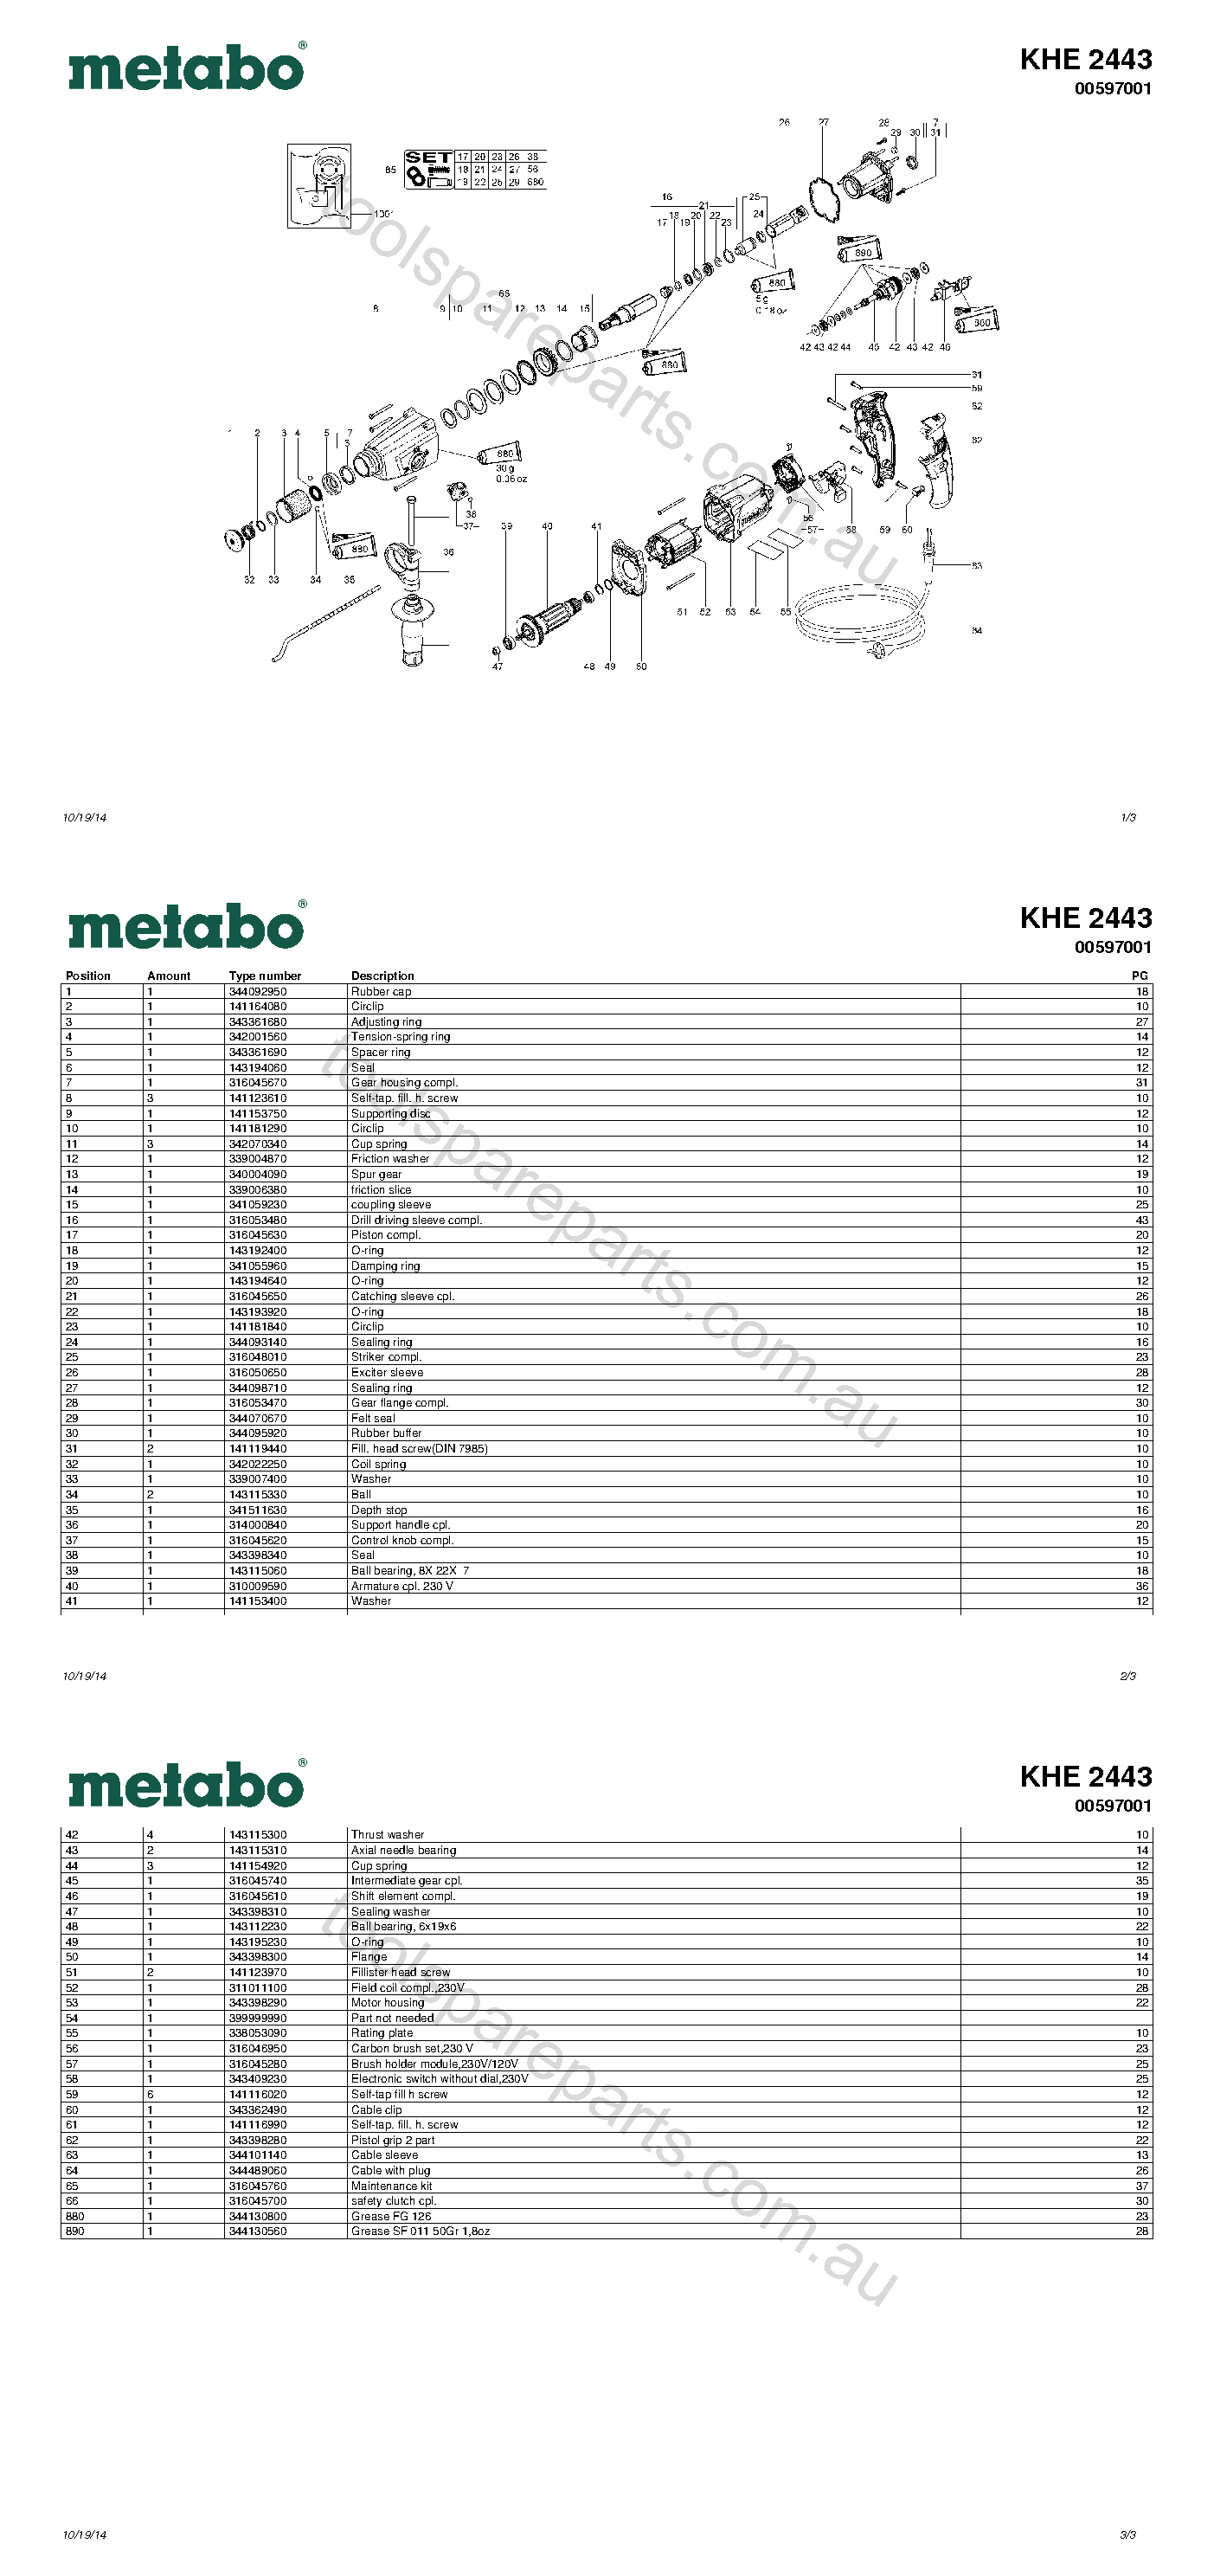 Metabo KHE 2443 00597001  Diagram 1